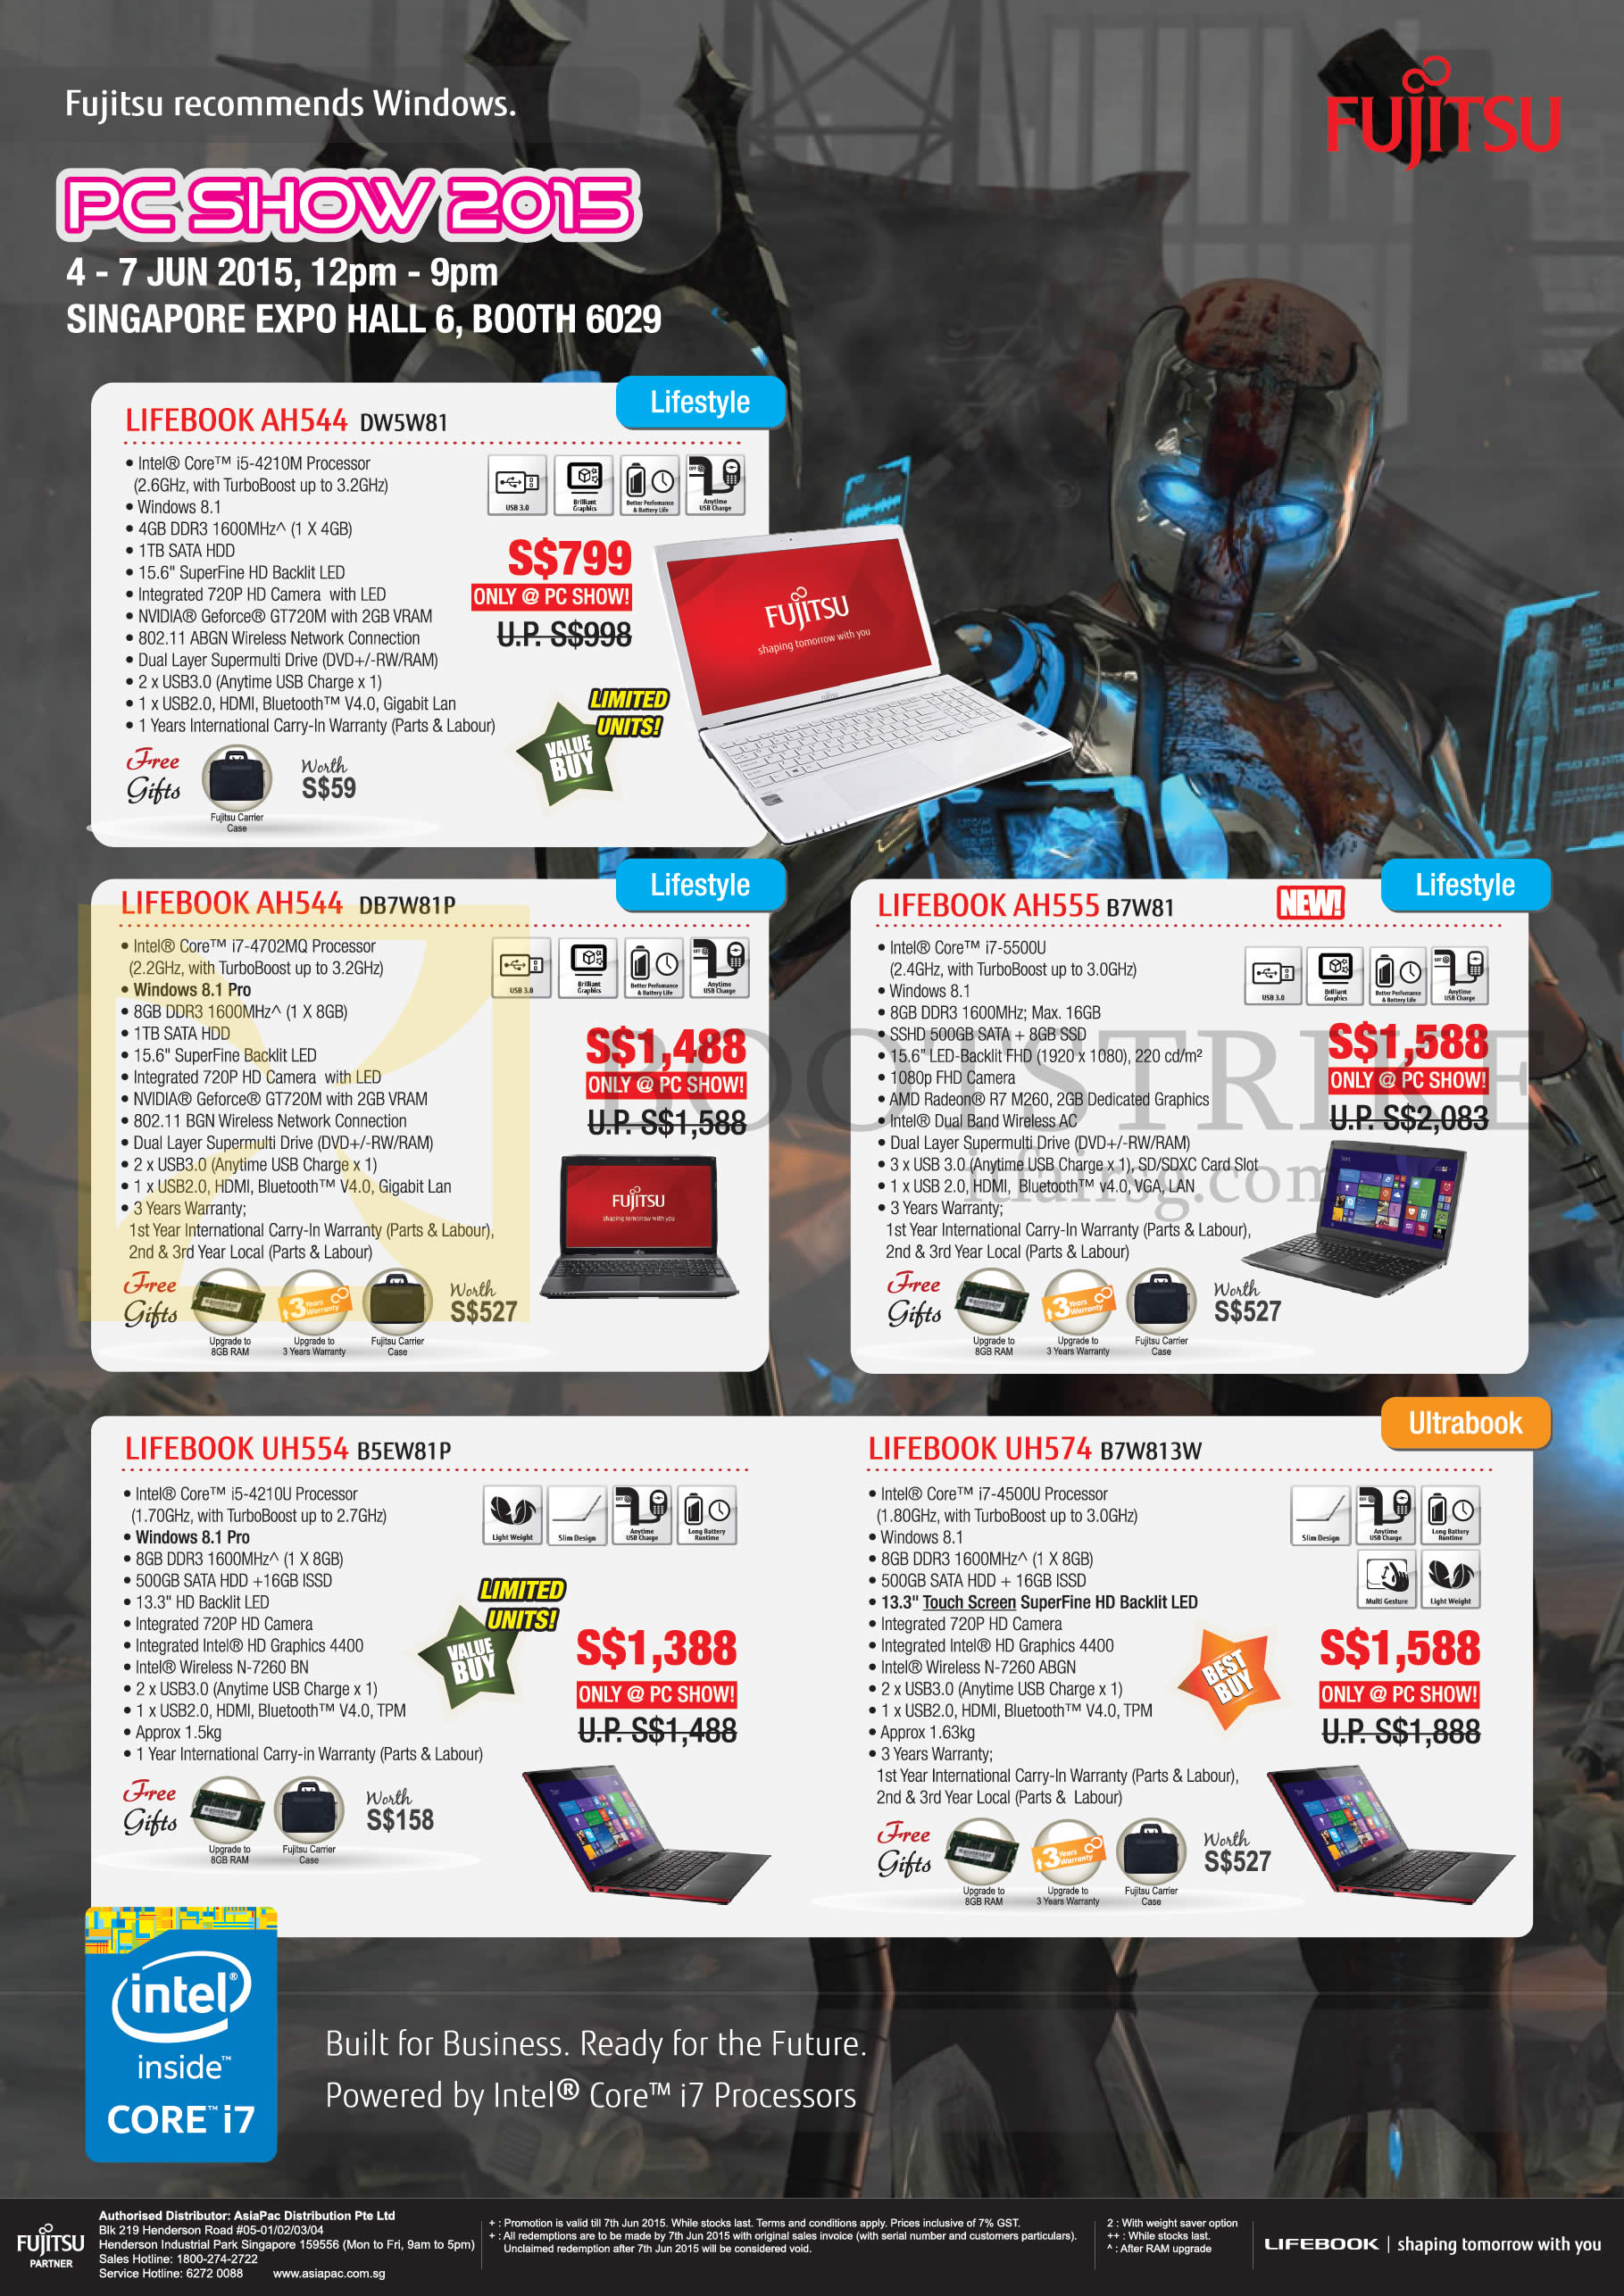 PC SHOW 2015 price list image brochure of Fujitsu (Newstead) Notebooks Lifebook AH544 DW5W81, DB7W81P, AH555 B7W81, UH554 B5EW81P, UH574 B7W813W